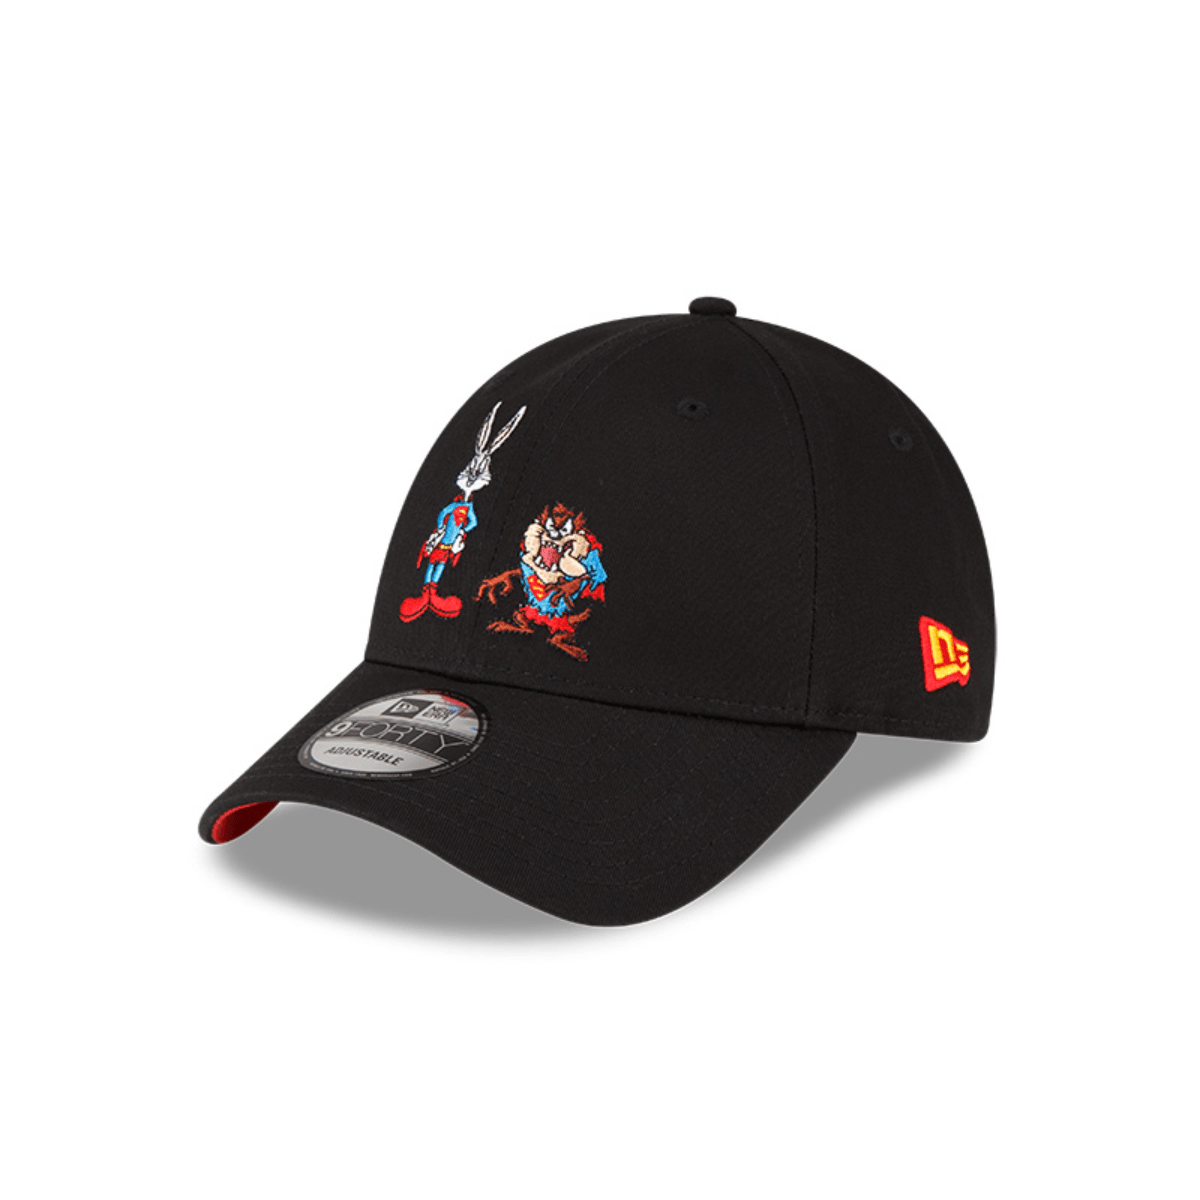 New Era Cap Ecuador - Consigue la gorra de la leyenda del beisbol Jackie  Robinson ⚾️ Encuéntrala en tu New Era. #NewEraCapEc